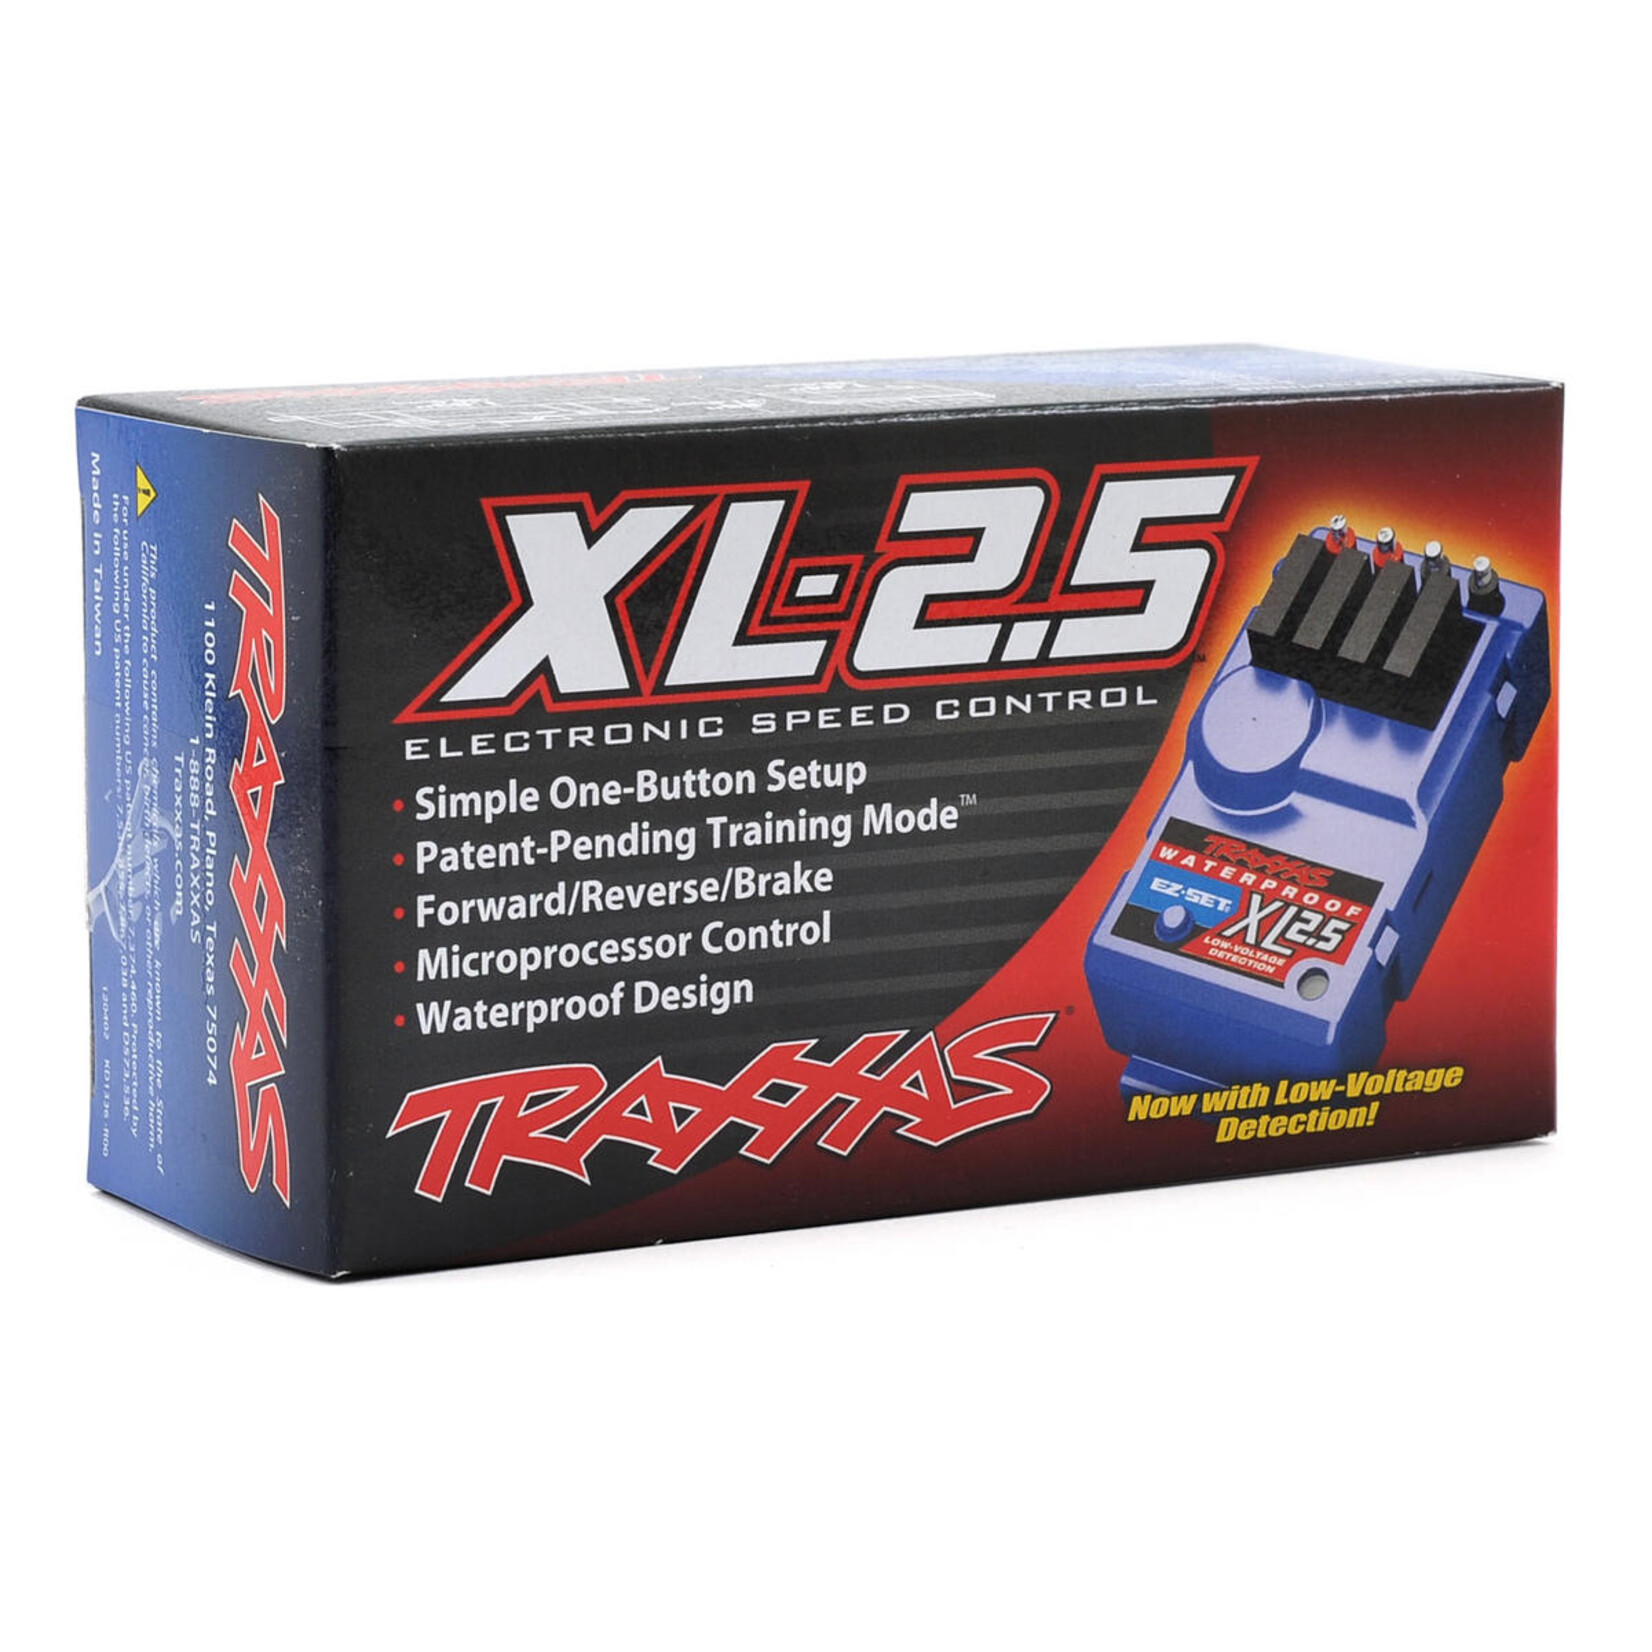 Traxxas Traxxas XL-2.5 ESC w/Low Voltage Detection (Waterproof) #3024R